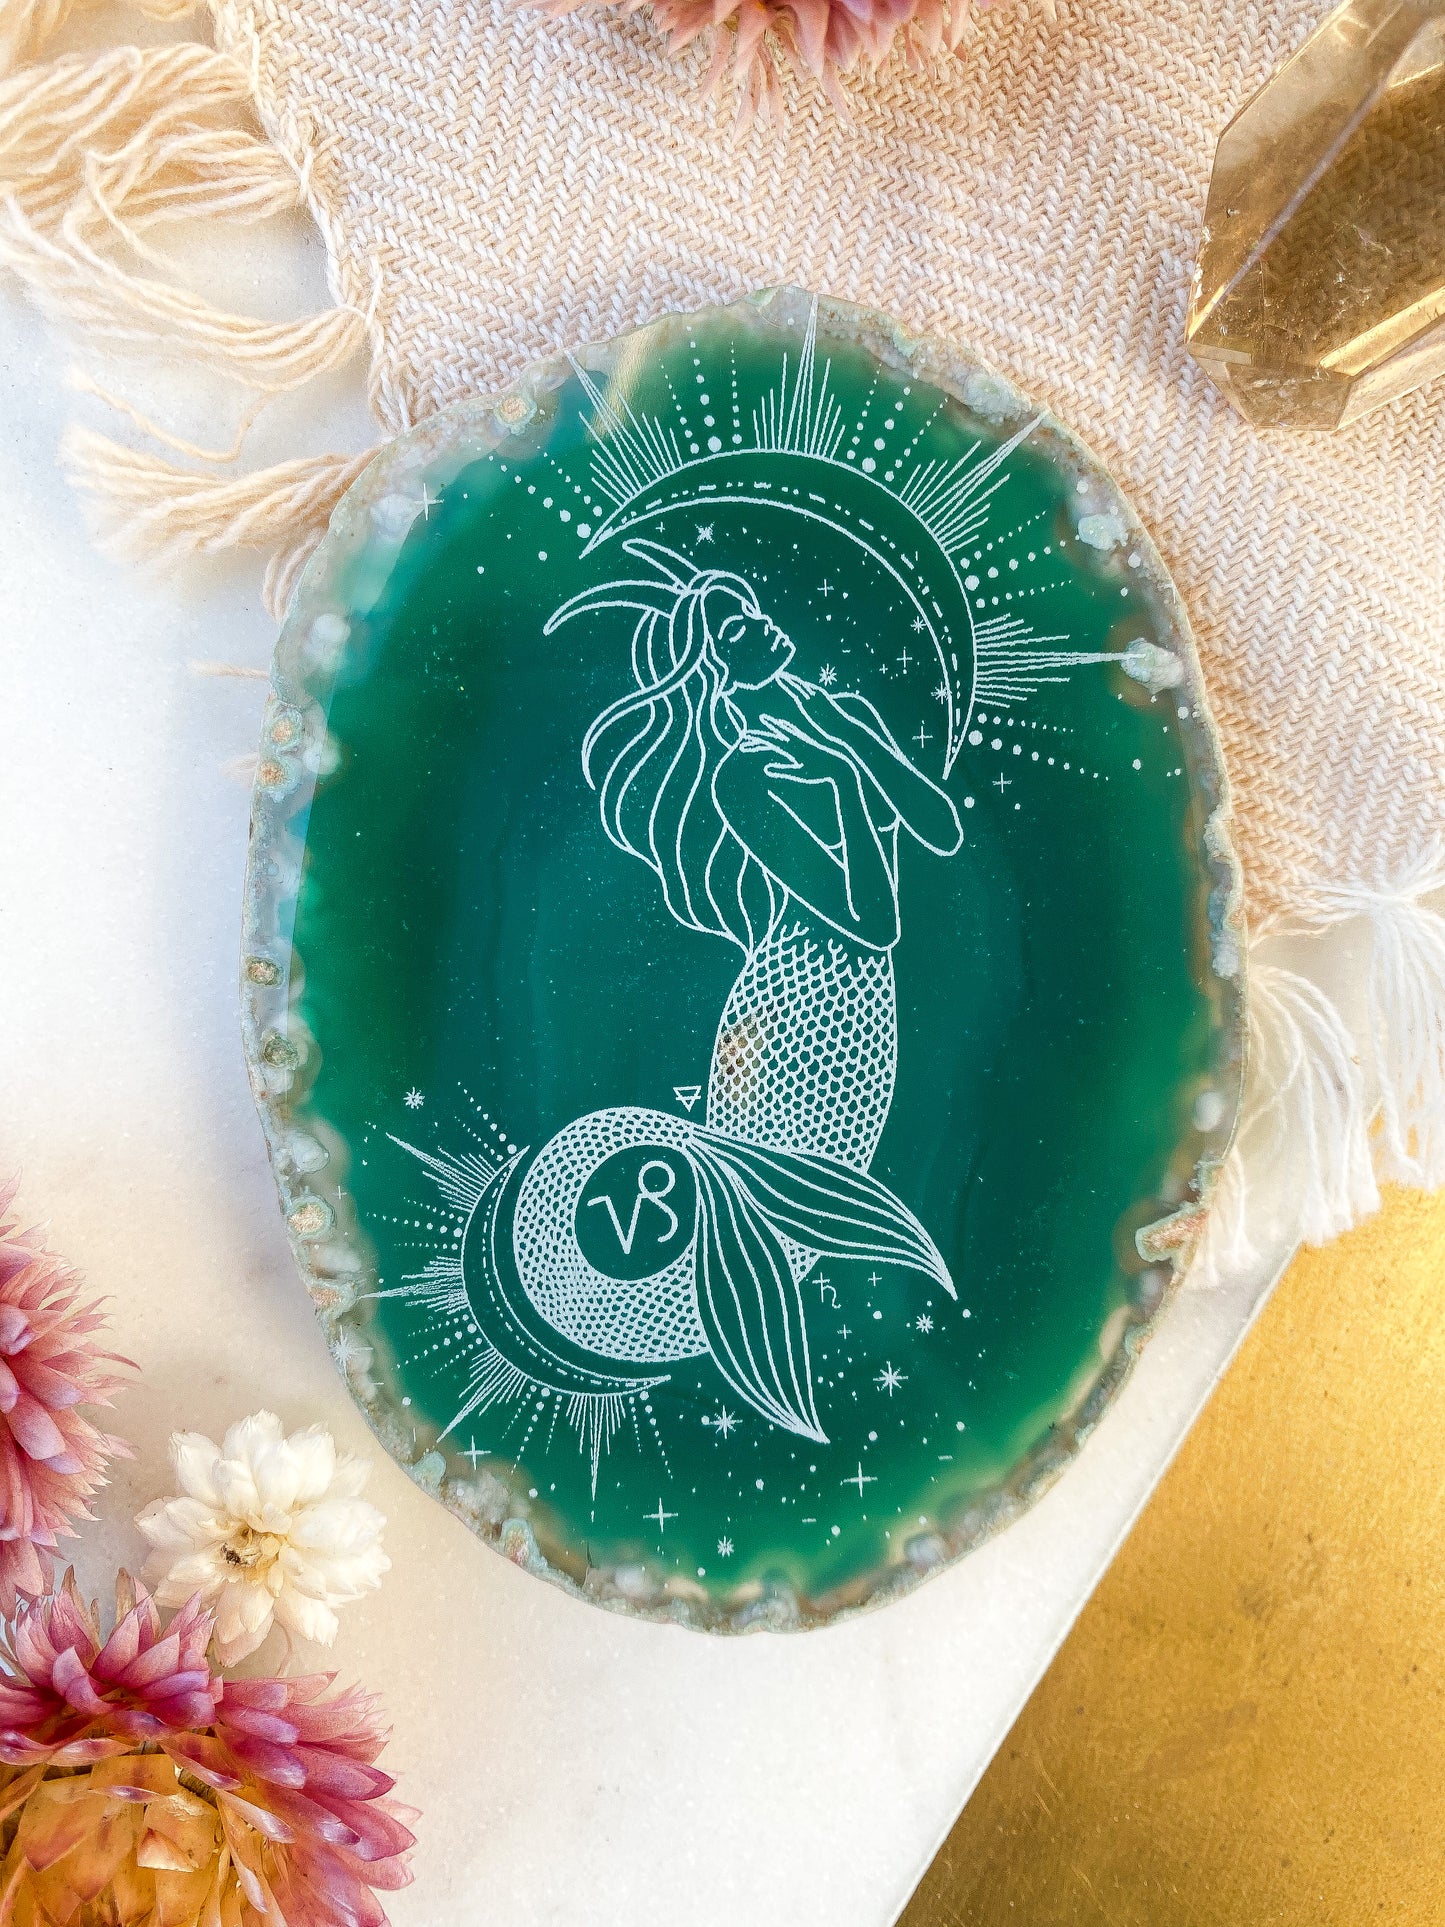 “Ambition” Capricorn Mermaid Sea Goat Zodiac Goddess Agate Slices - Oblong